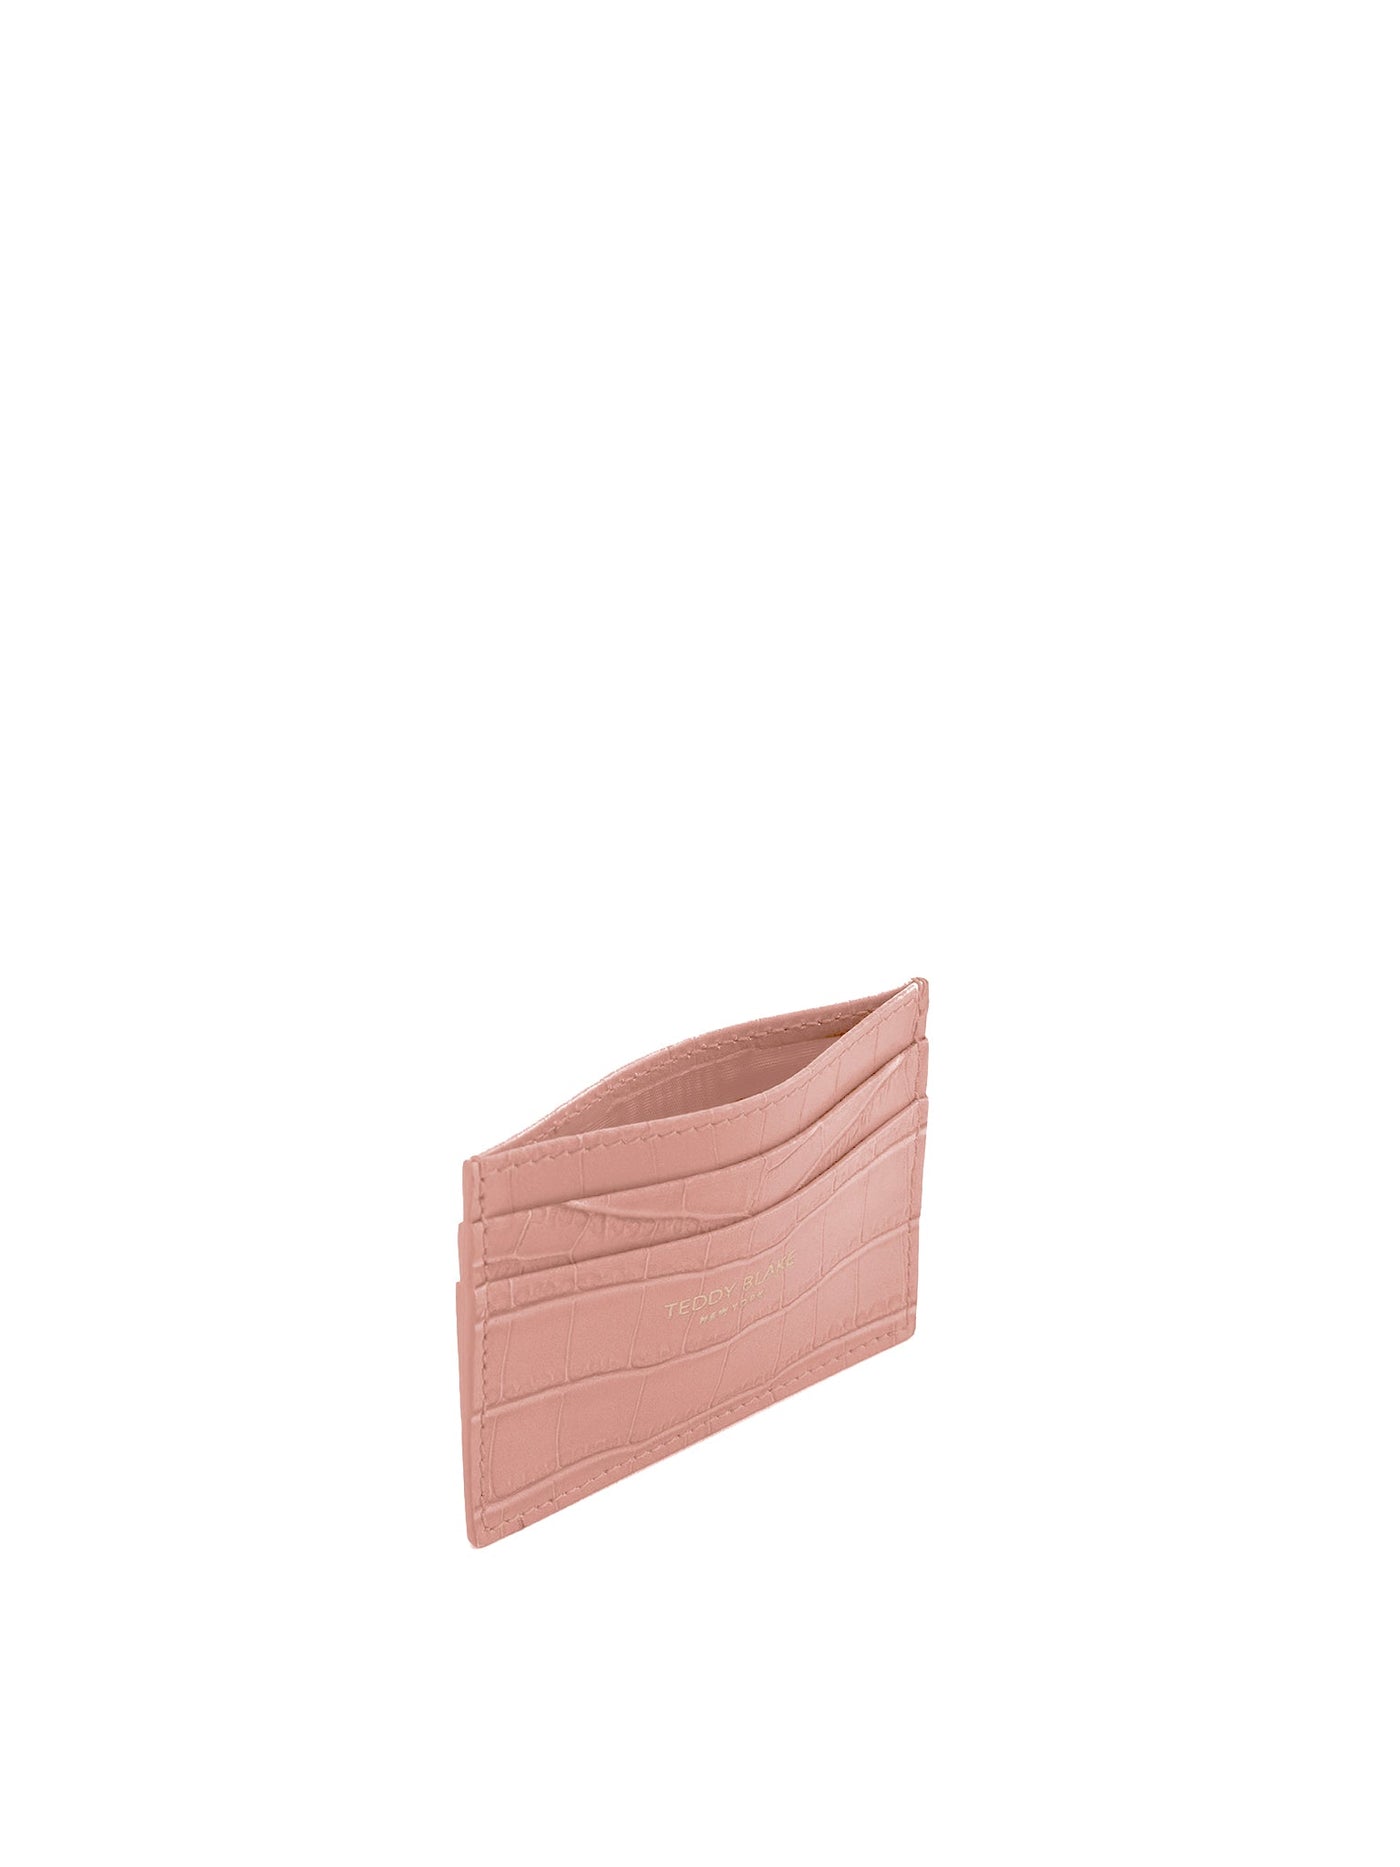 TB Cardholder Croco - Nude Pink